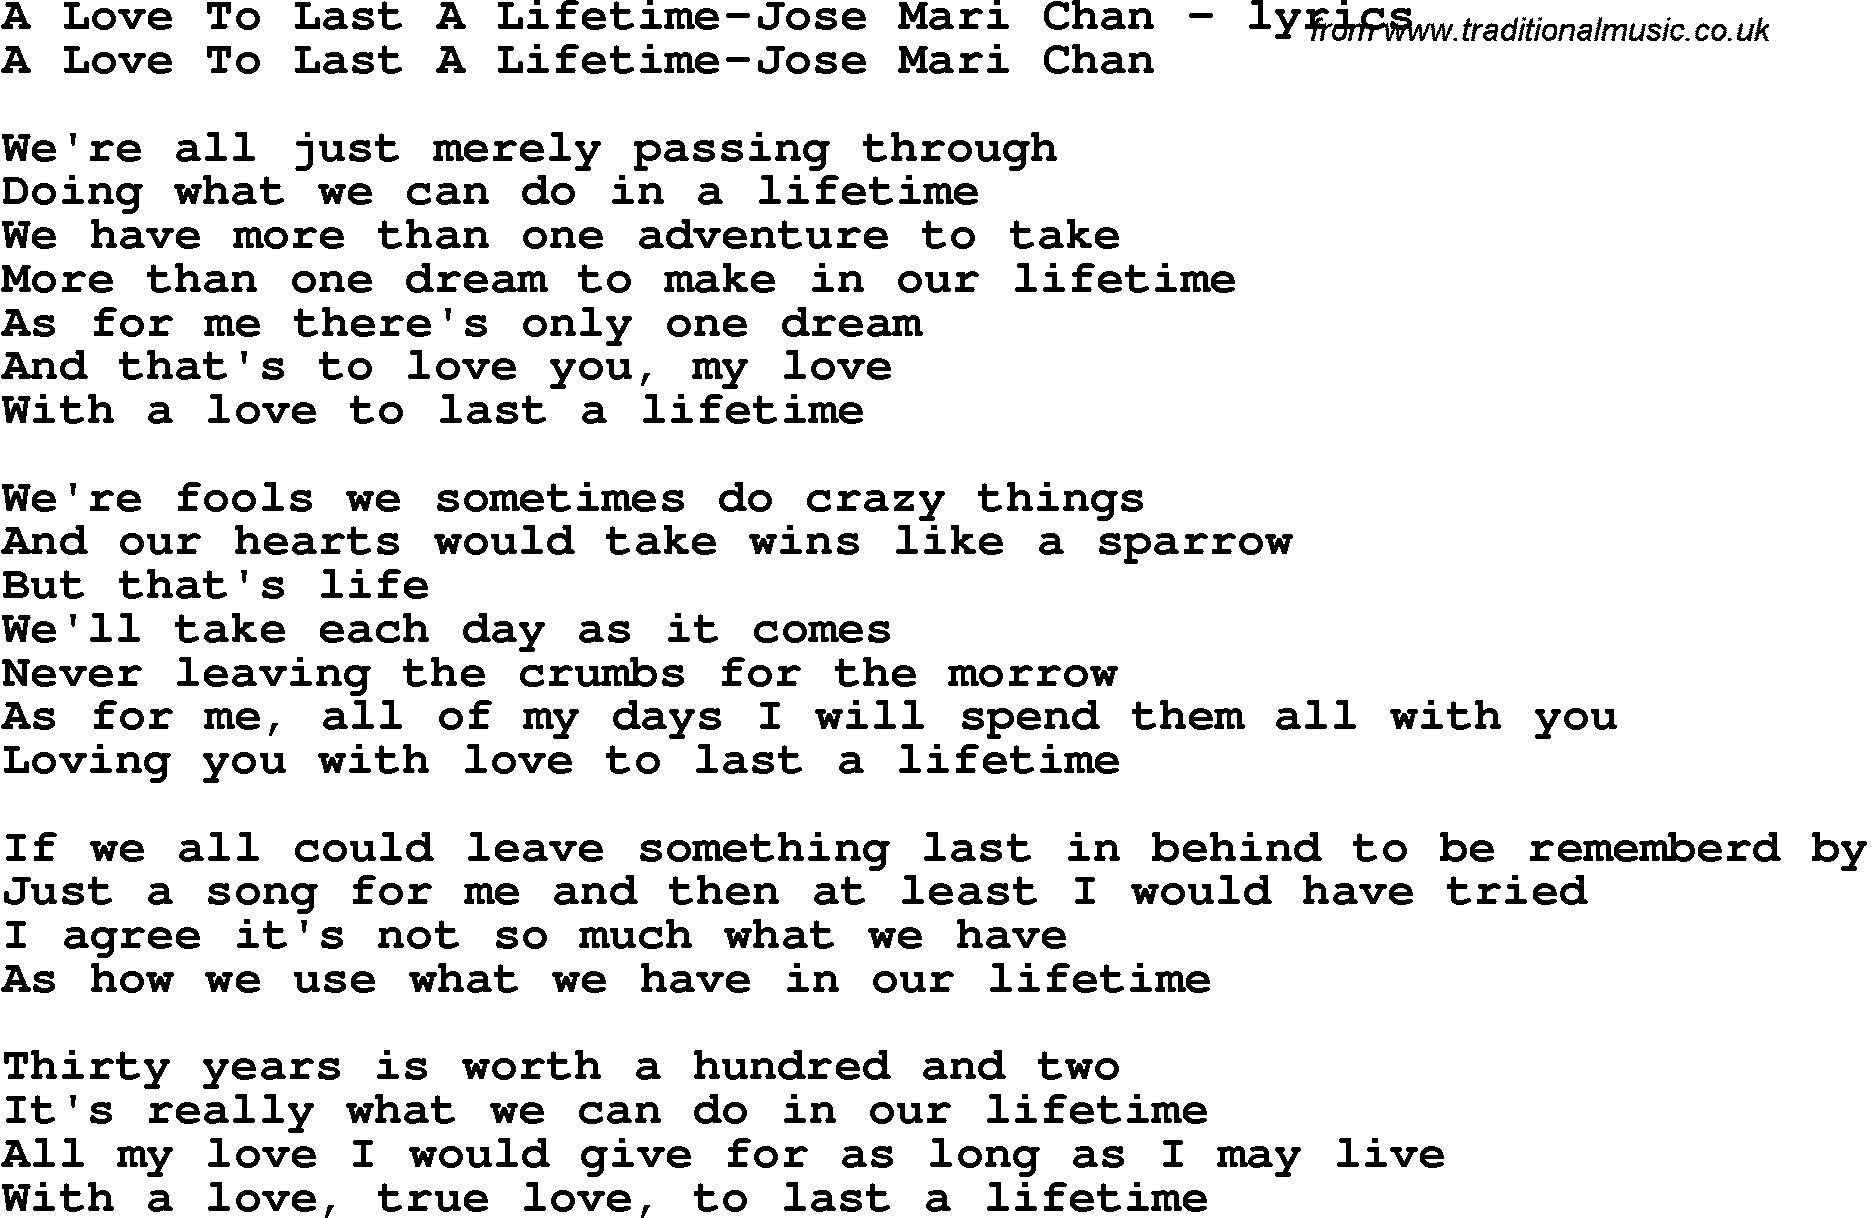 Love Song Lyrics for: A Love To Last A Lifetime-Jose Mari Chan